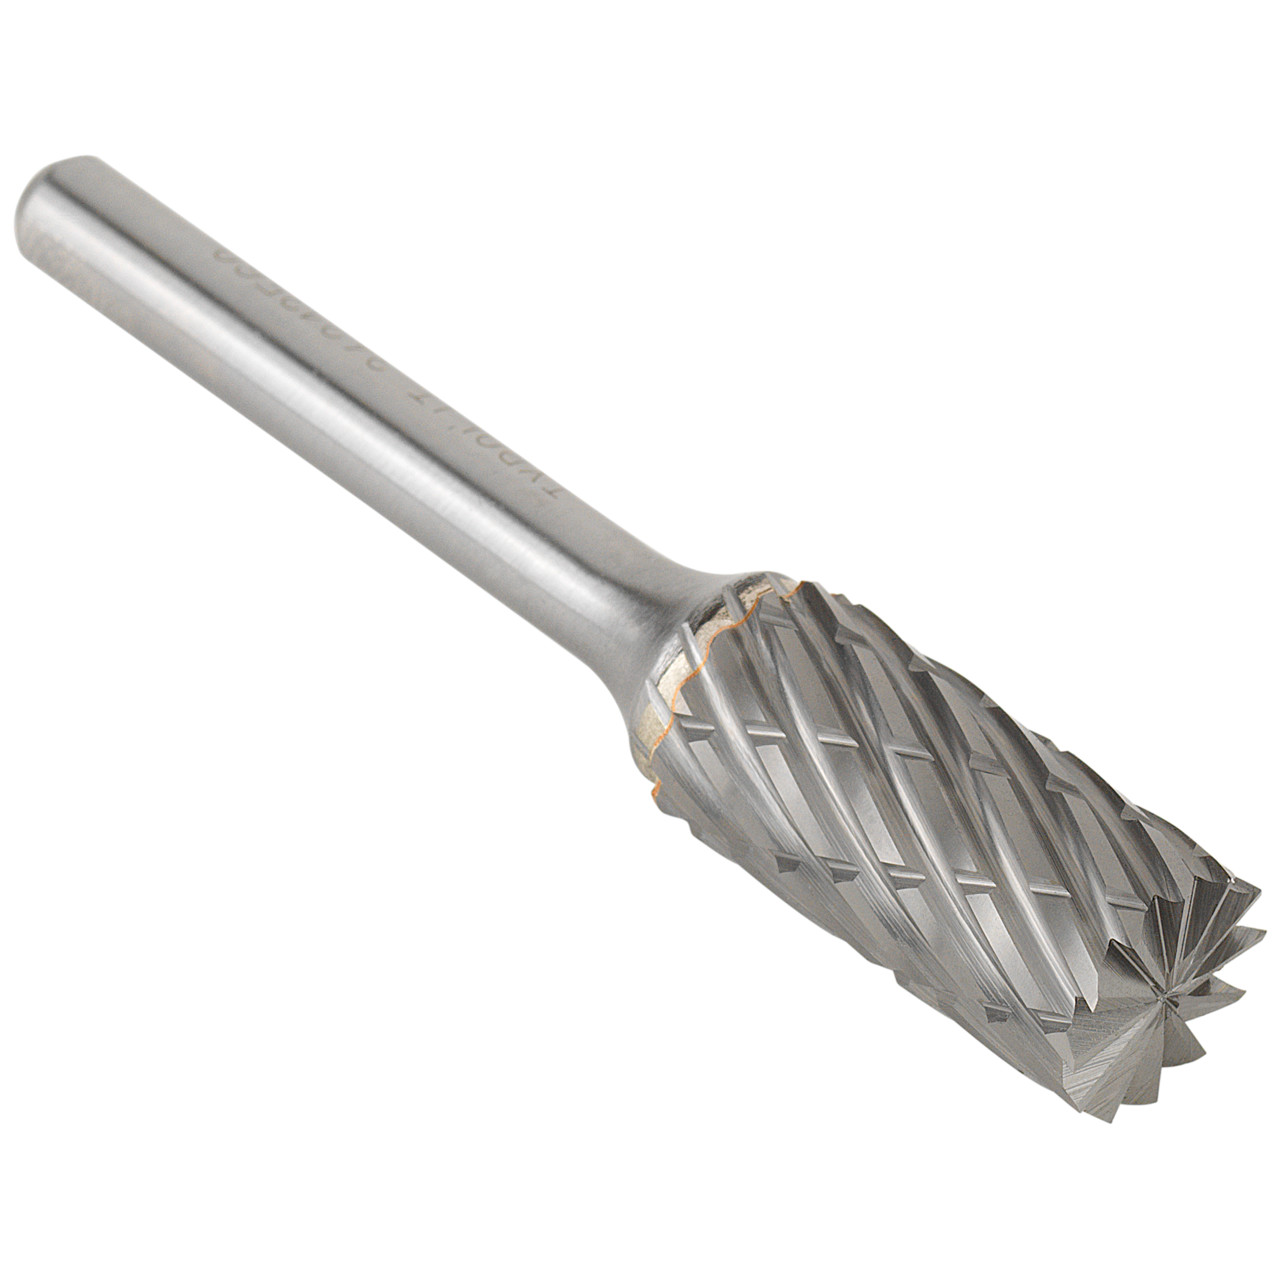 Fresa in metallo duro Tyrolit DxT-SxL 6x18-6x50 Per acciaio, forma: 52ZYAS - cilindro con dentatura frontale, Art. 34213557